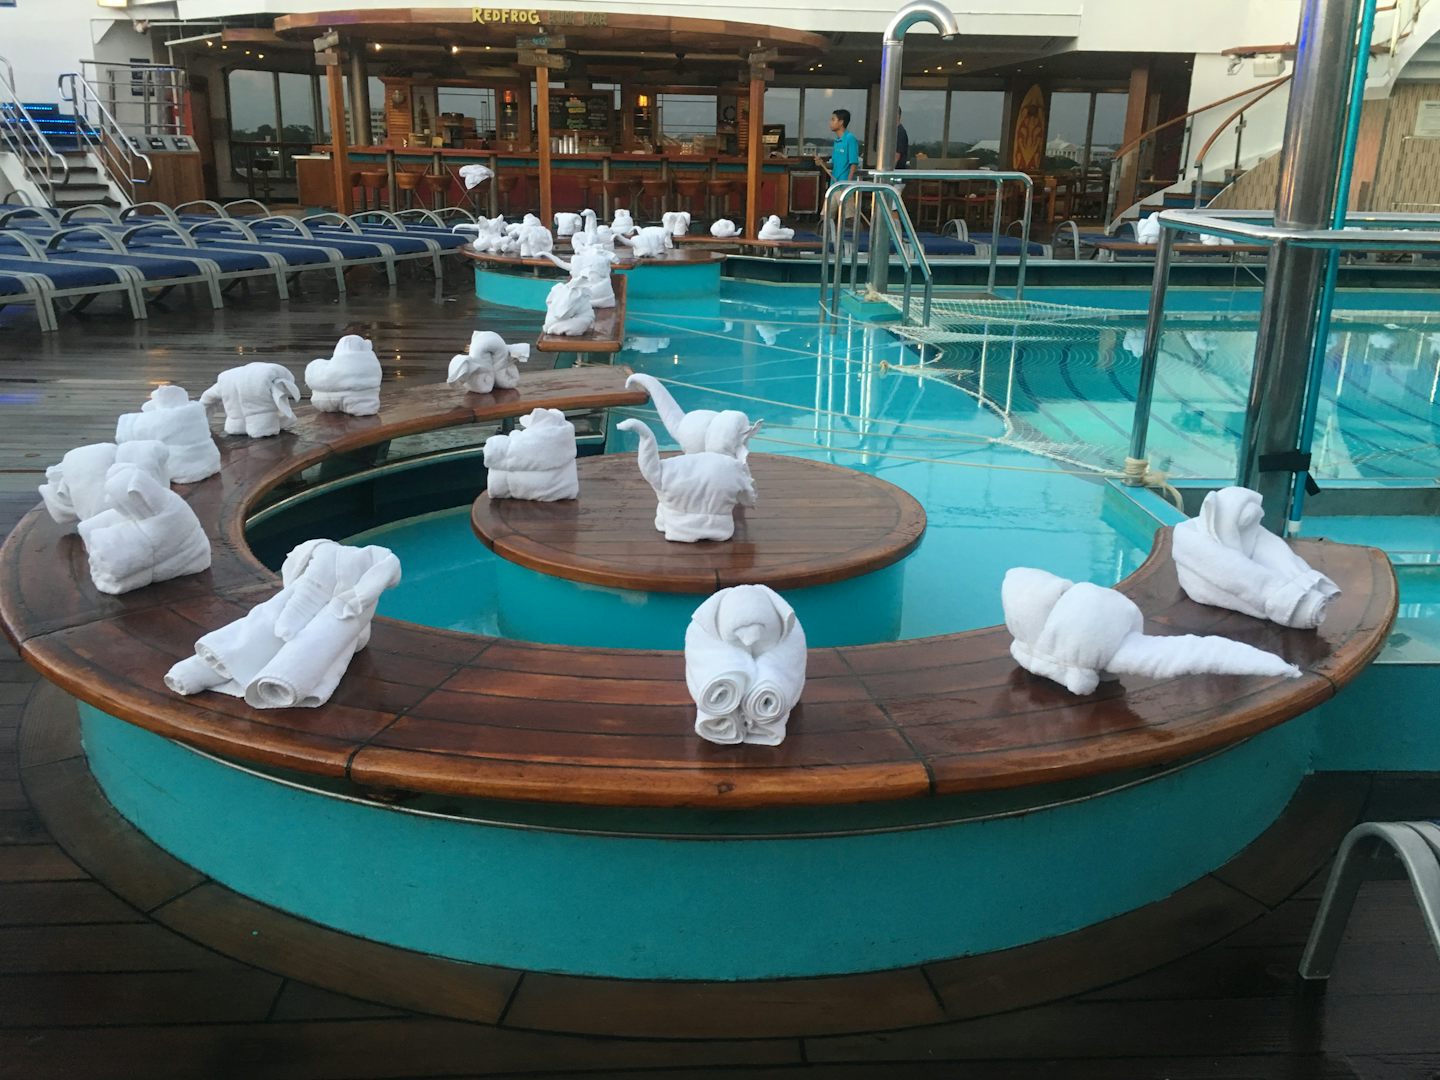 Towel animals everywhere on Lido deck